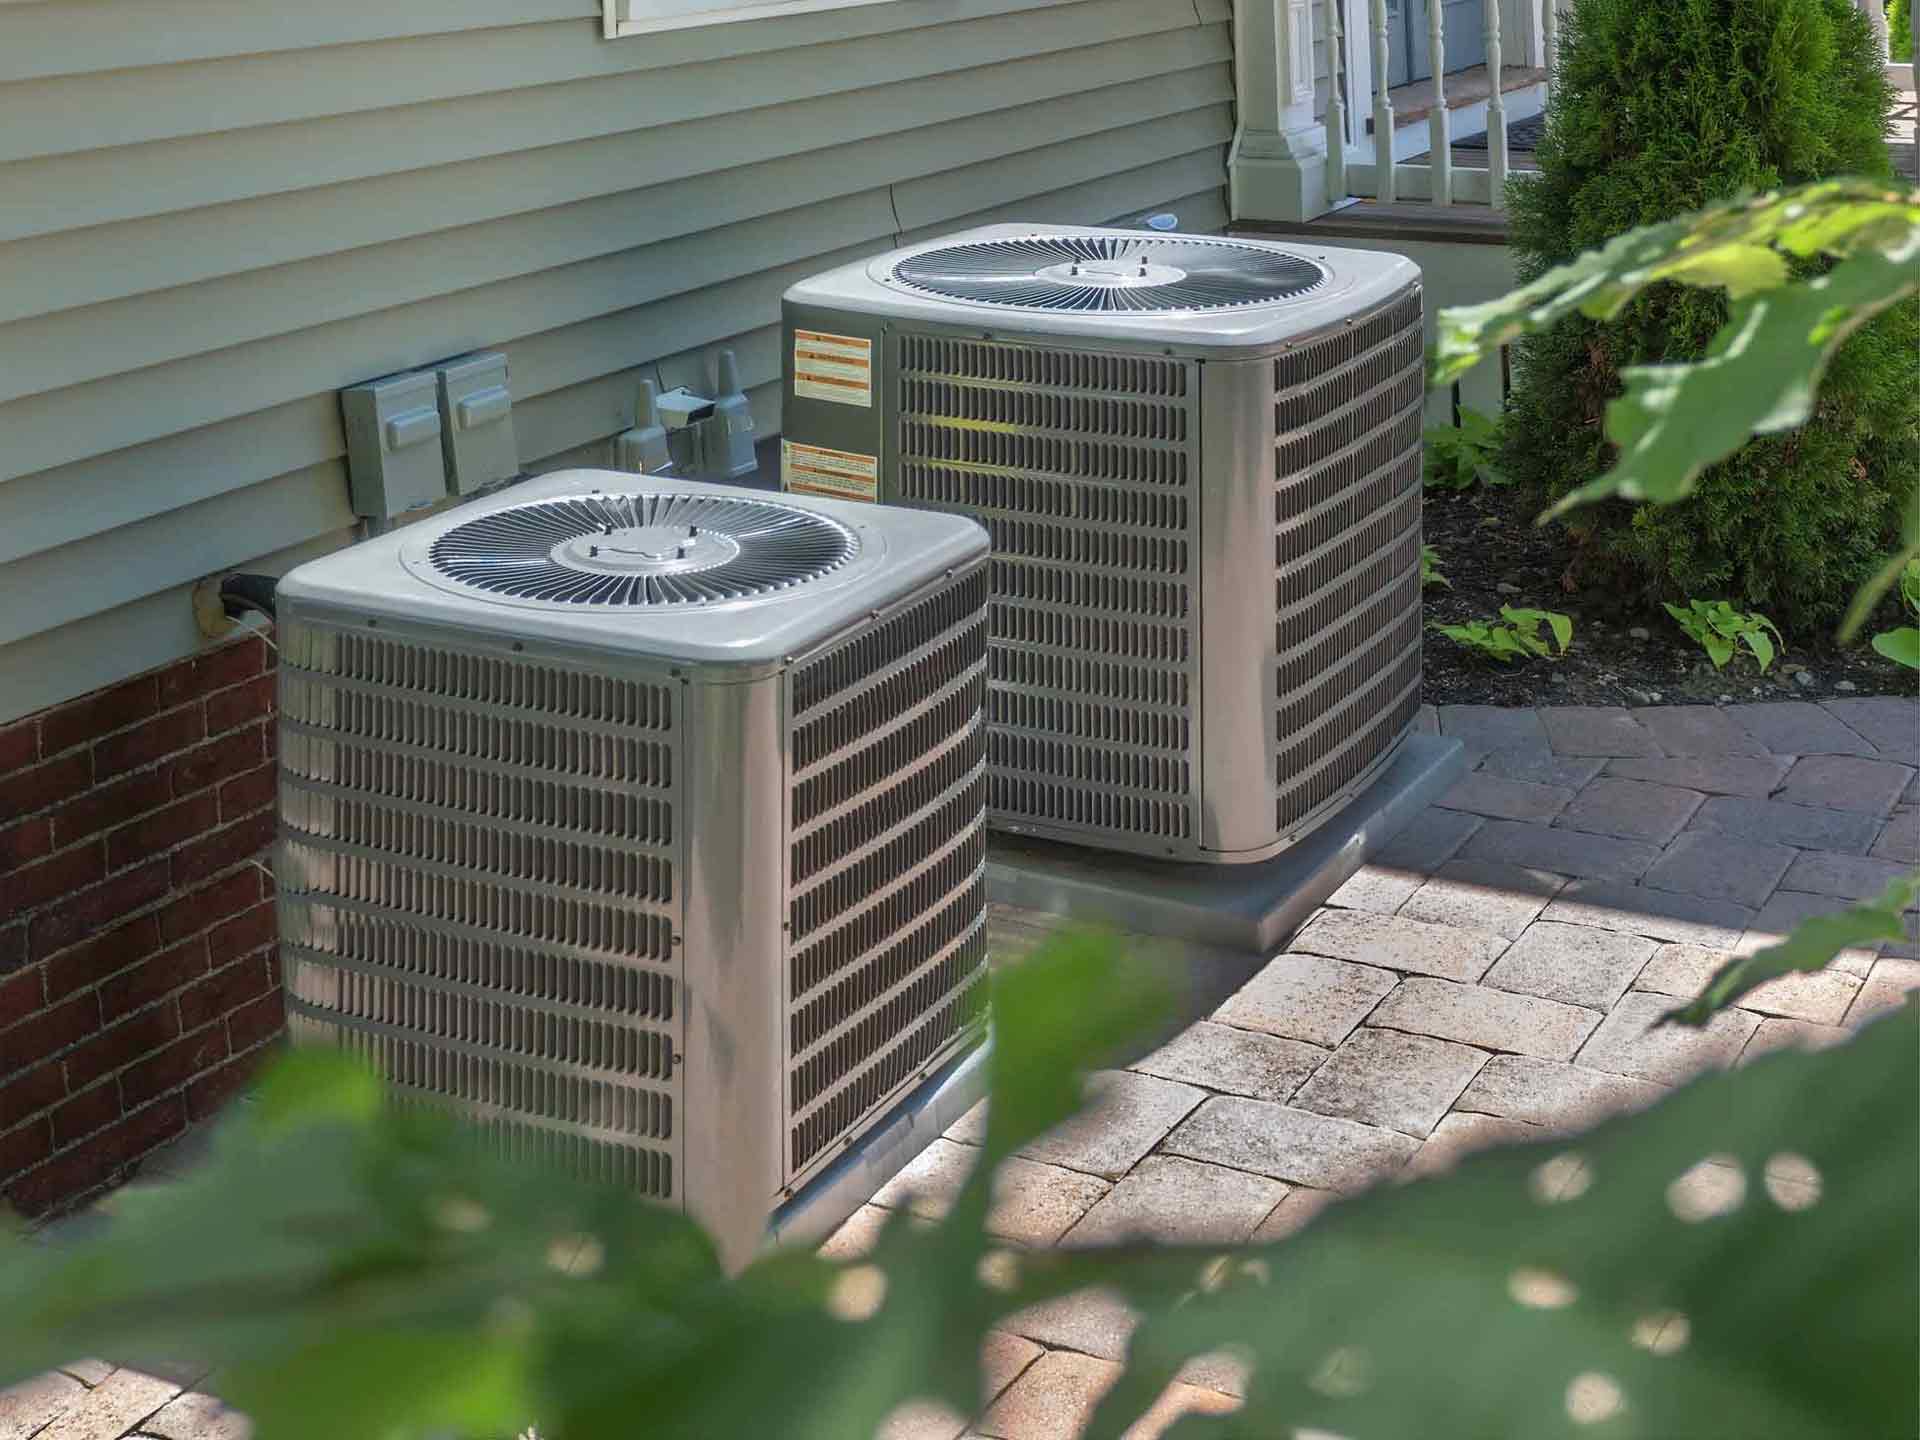 r9-air-conditioner-heat-pump-units-outside-home-16794091092387.jpg